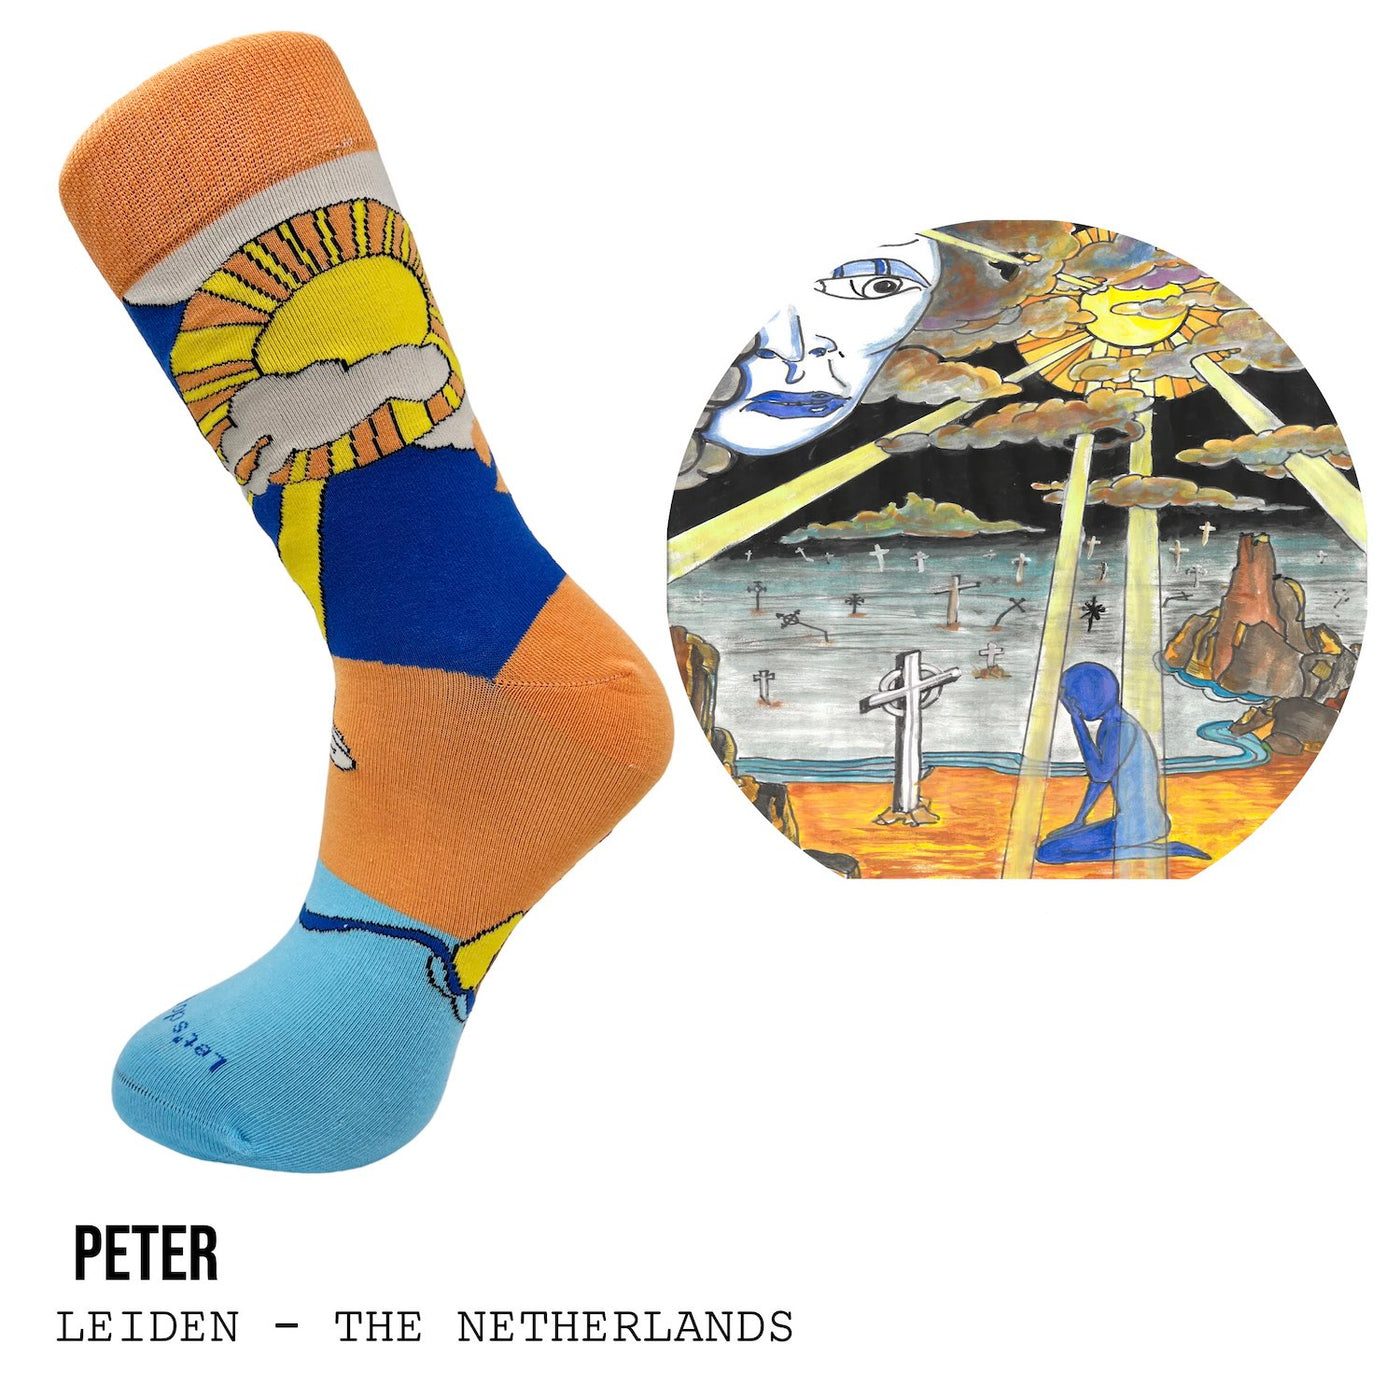 Peter_socks.